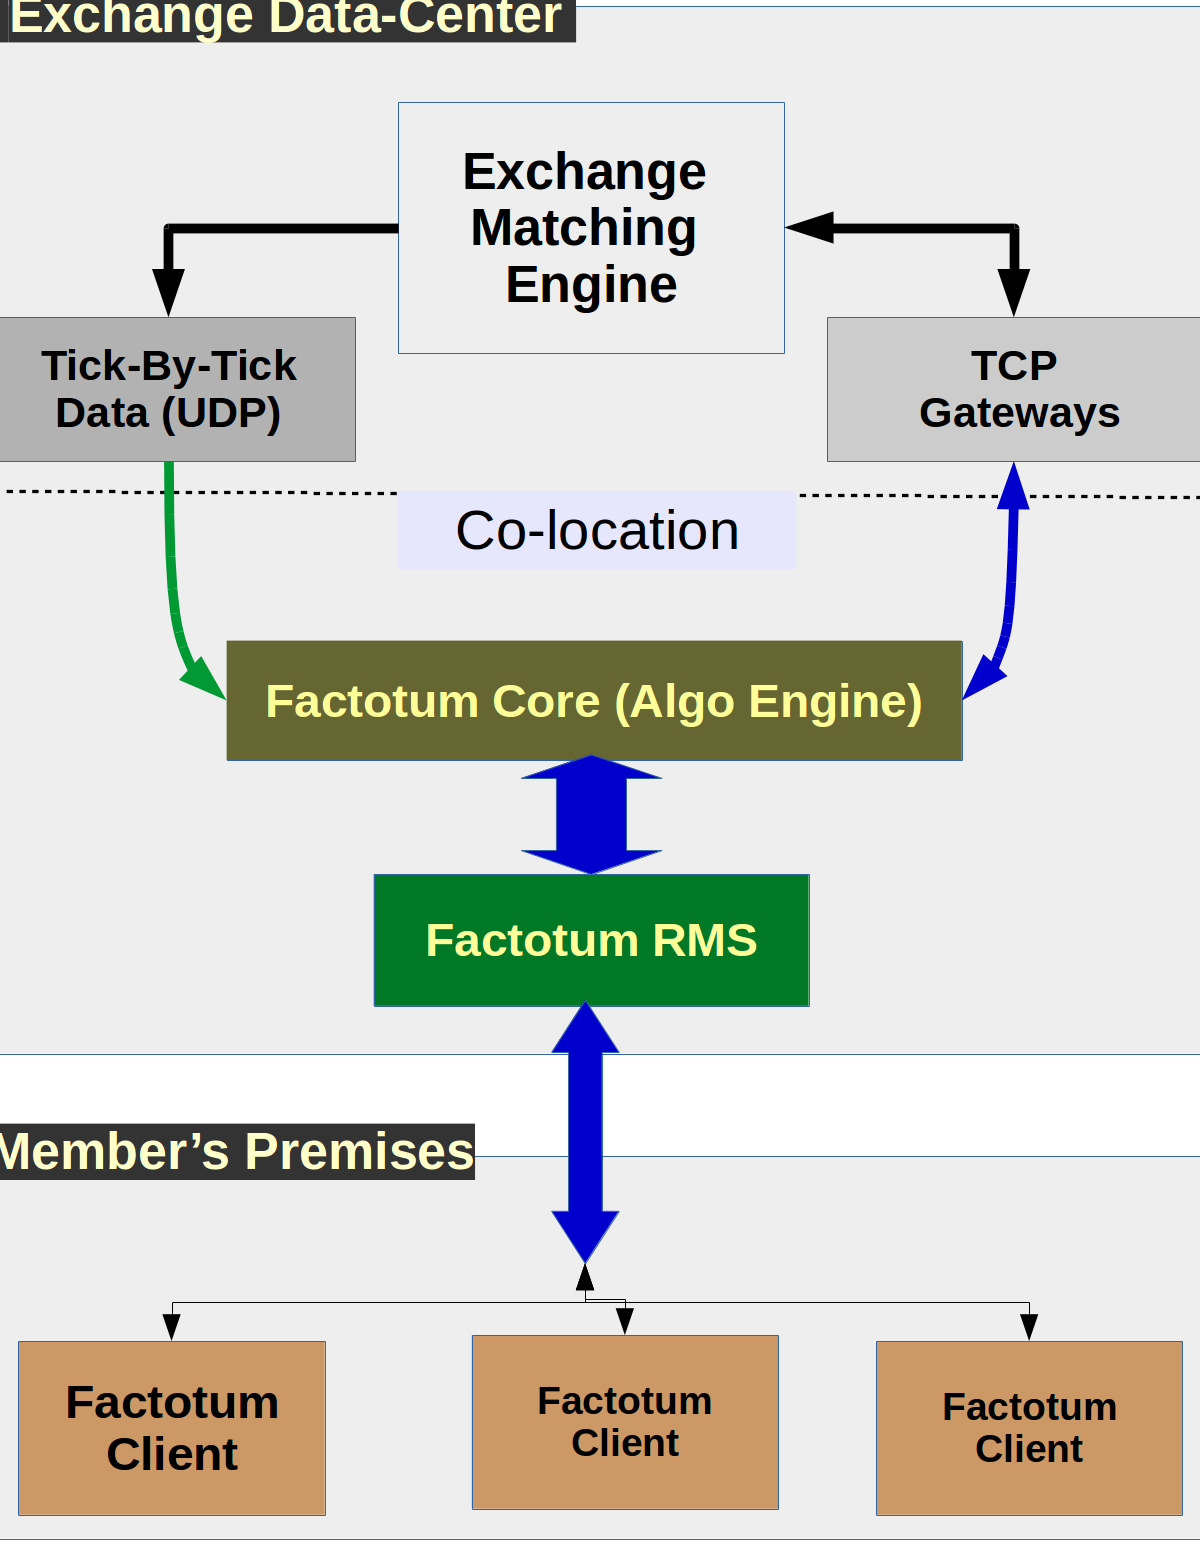 factotum - Setup in Exchange Co-location